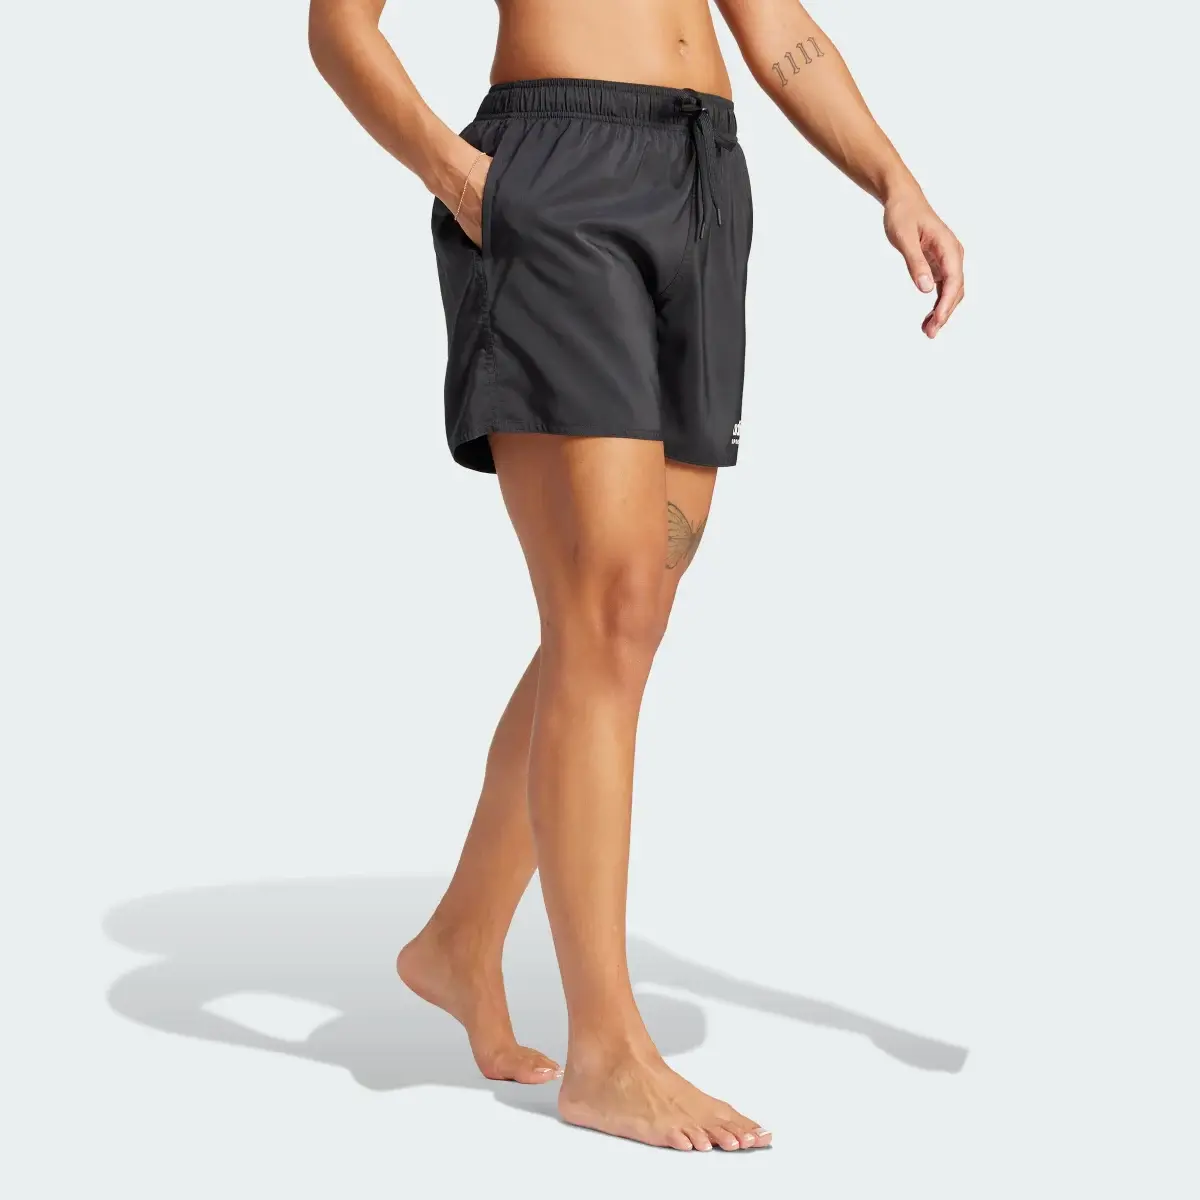 Adidas Branded Beach Shorts. 3